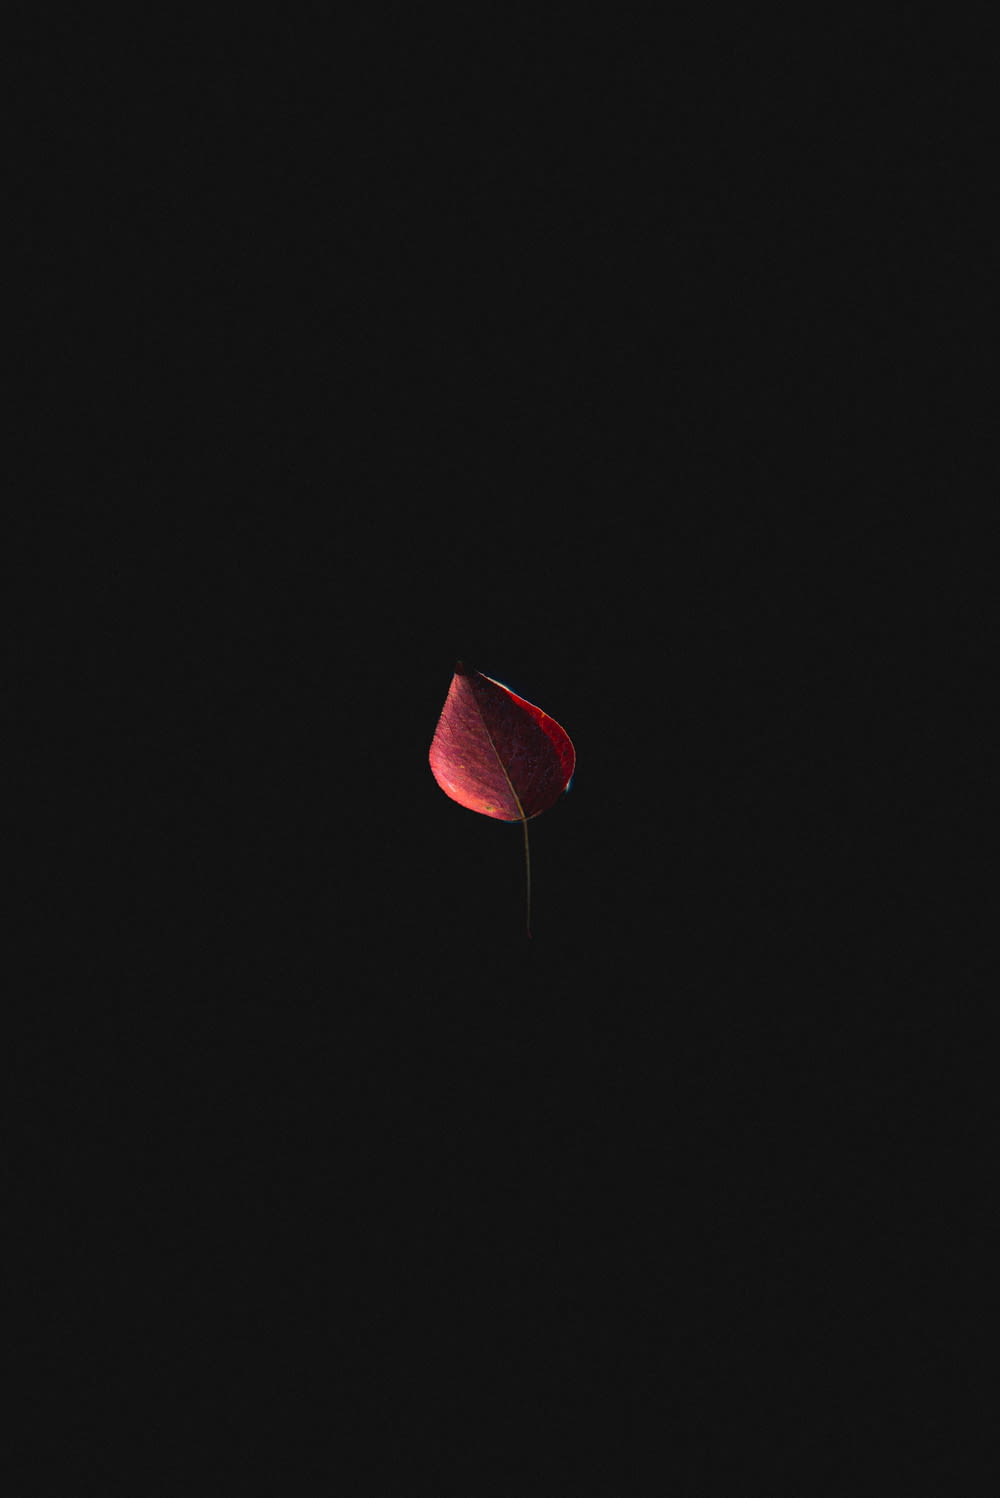 red heart balloon in dark room